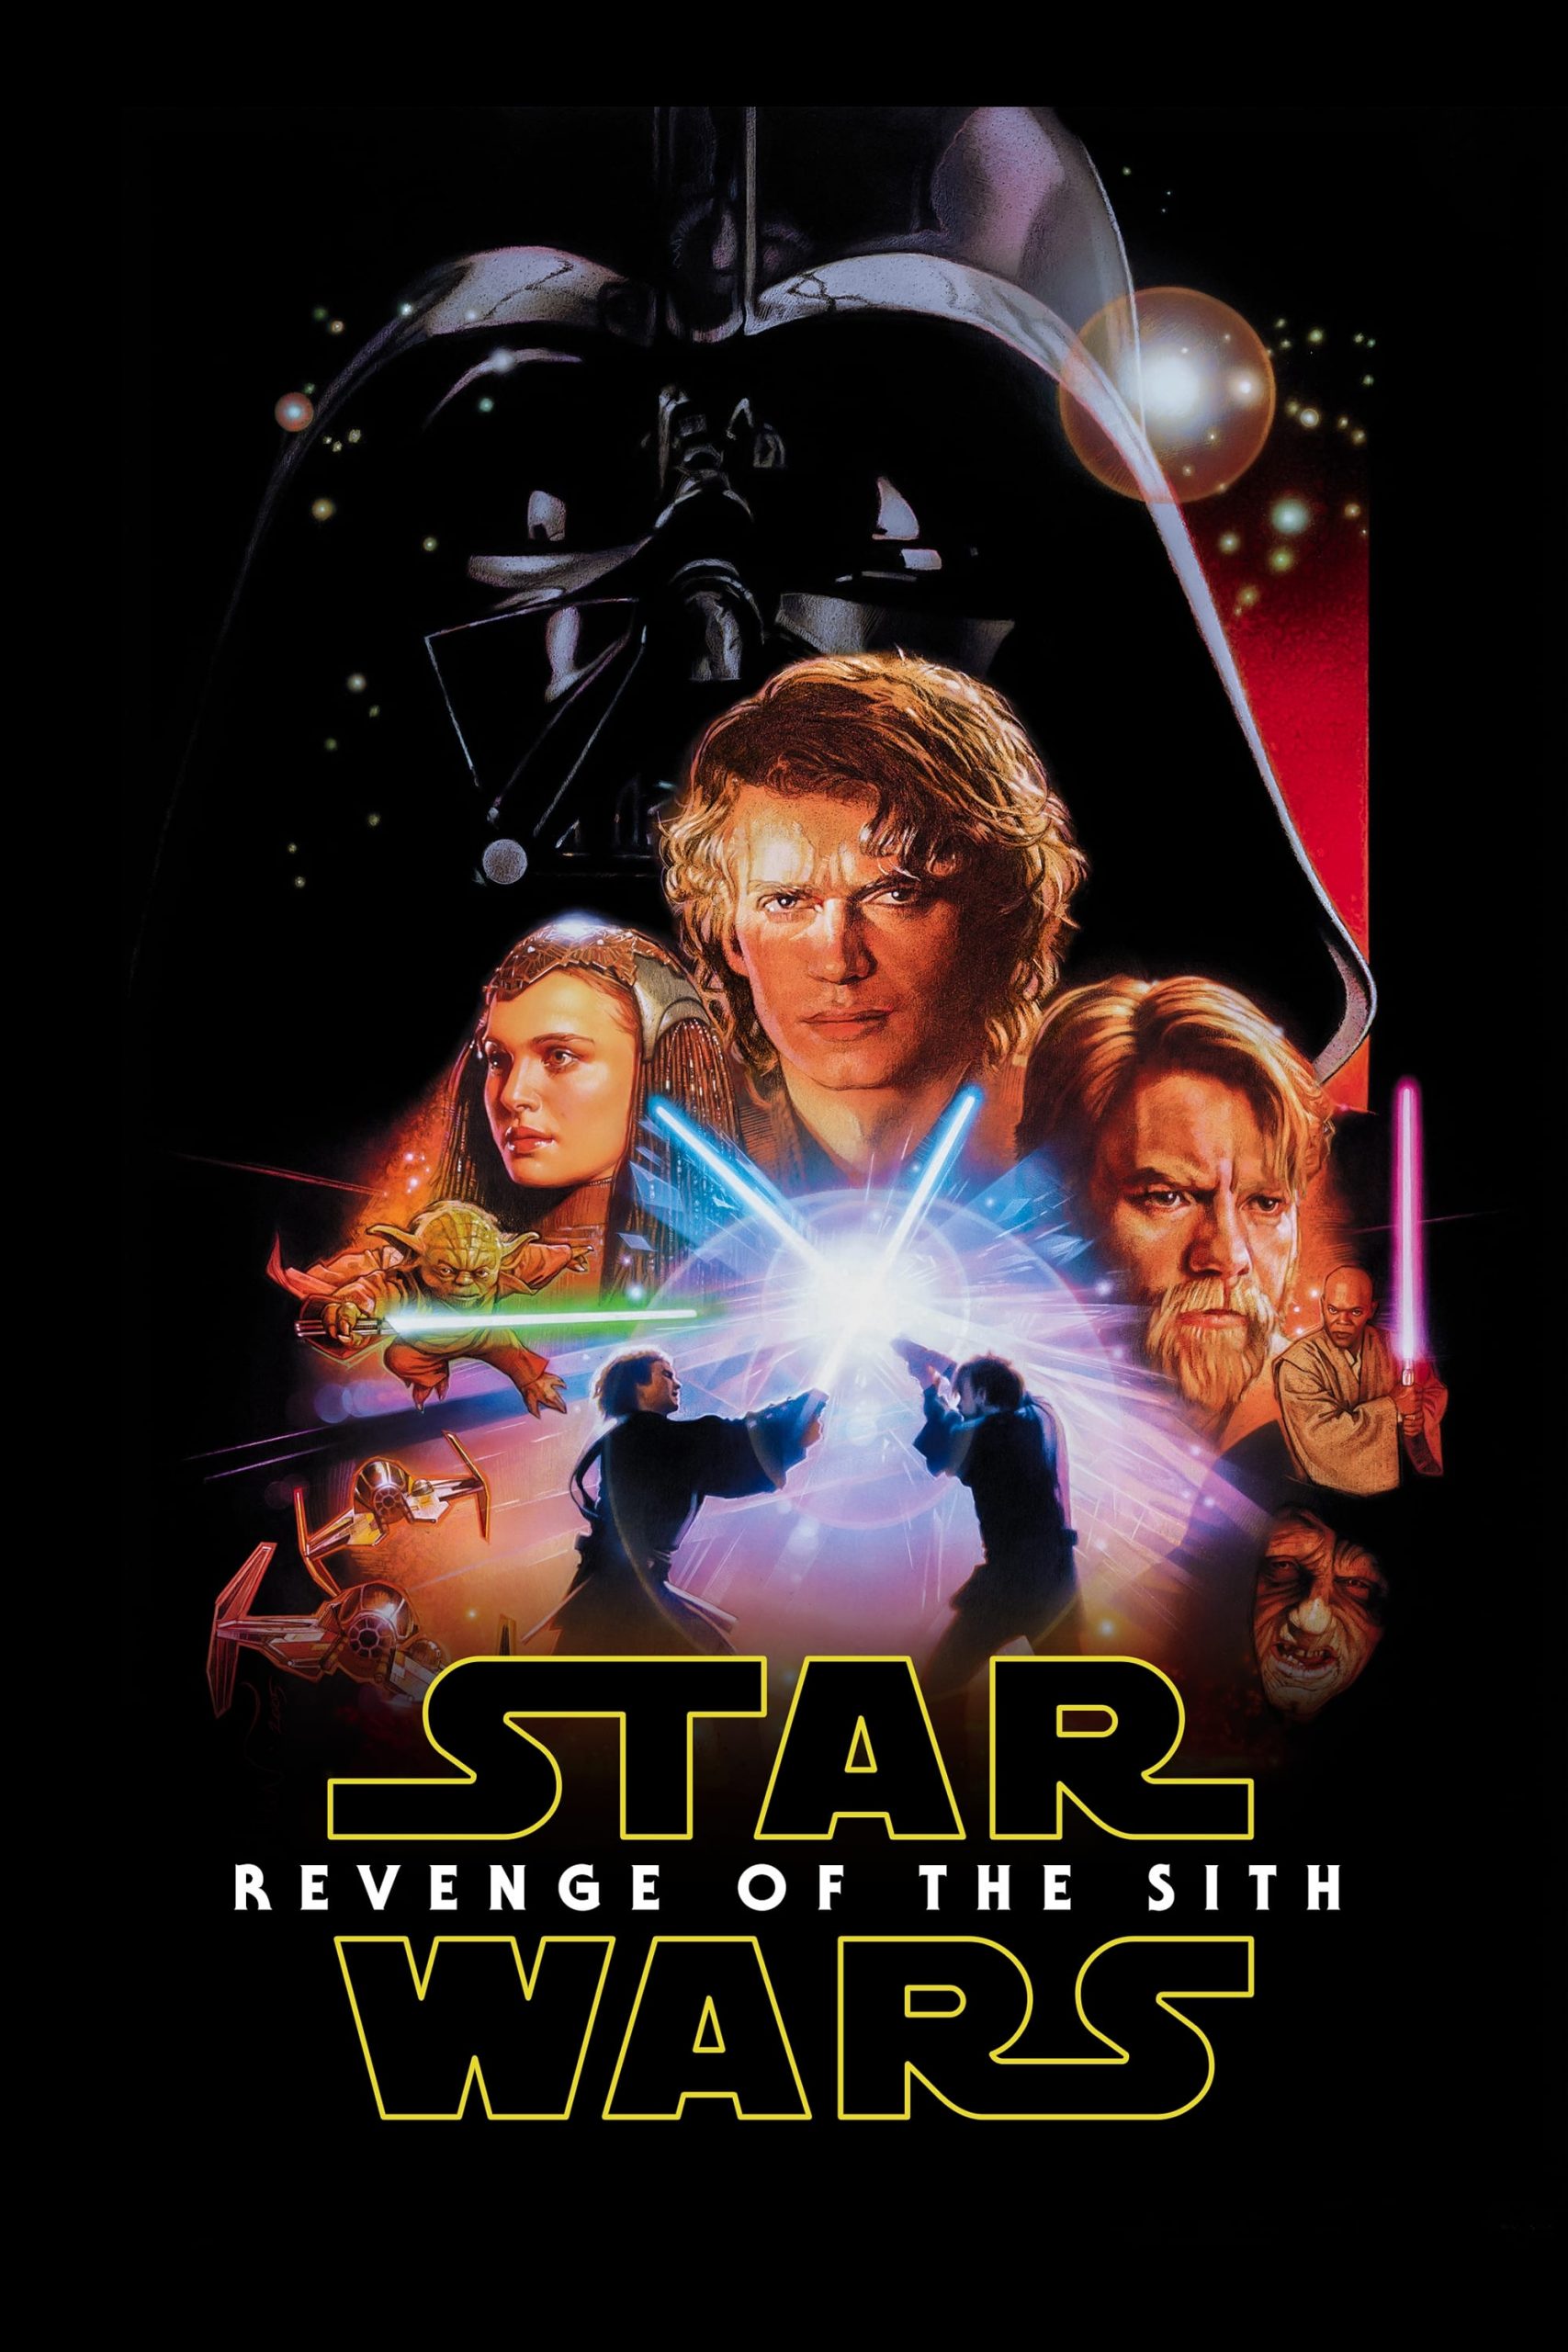 Star Wars: Episode Iii - Revenge Of The Sith (2005) Gratis tout Revenge Of The Sith Imdb